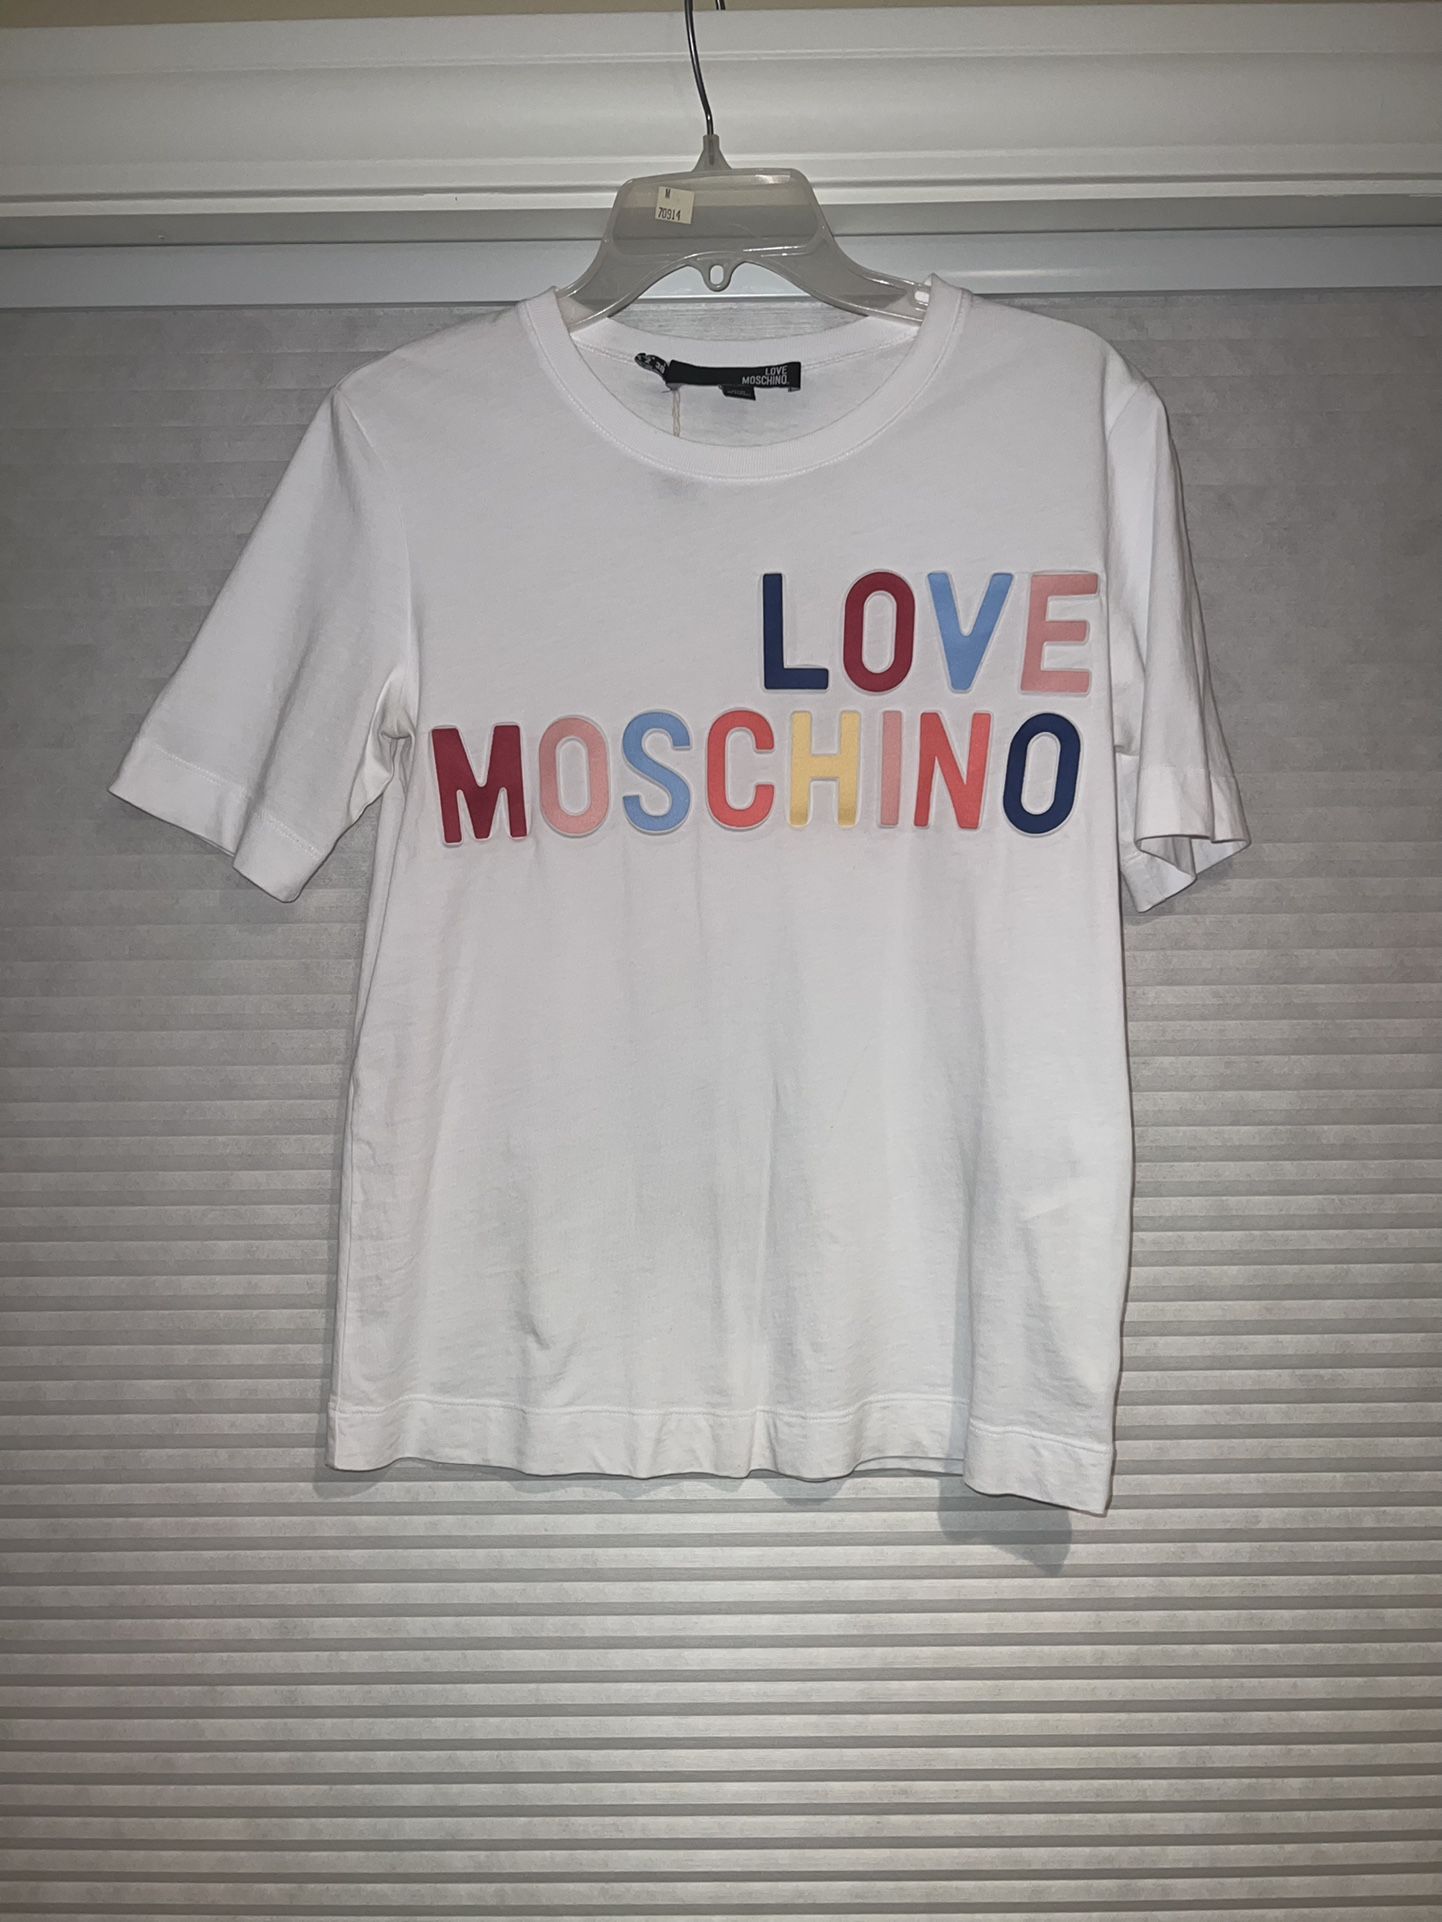 Moschino T Shirt Worn Twice Grea Condition White Tee Raised Moschino Logo Fits Womens XS/s Size 2